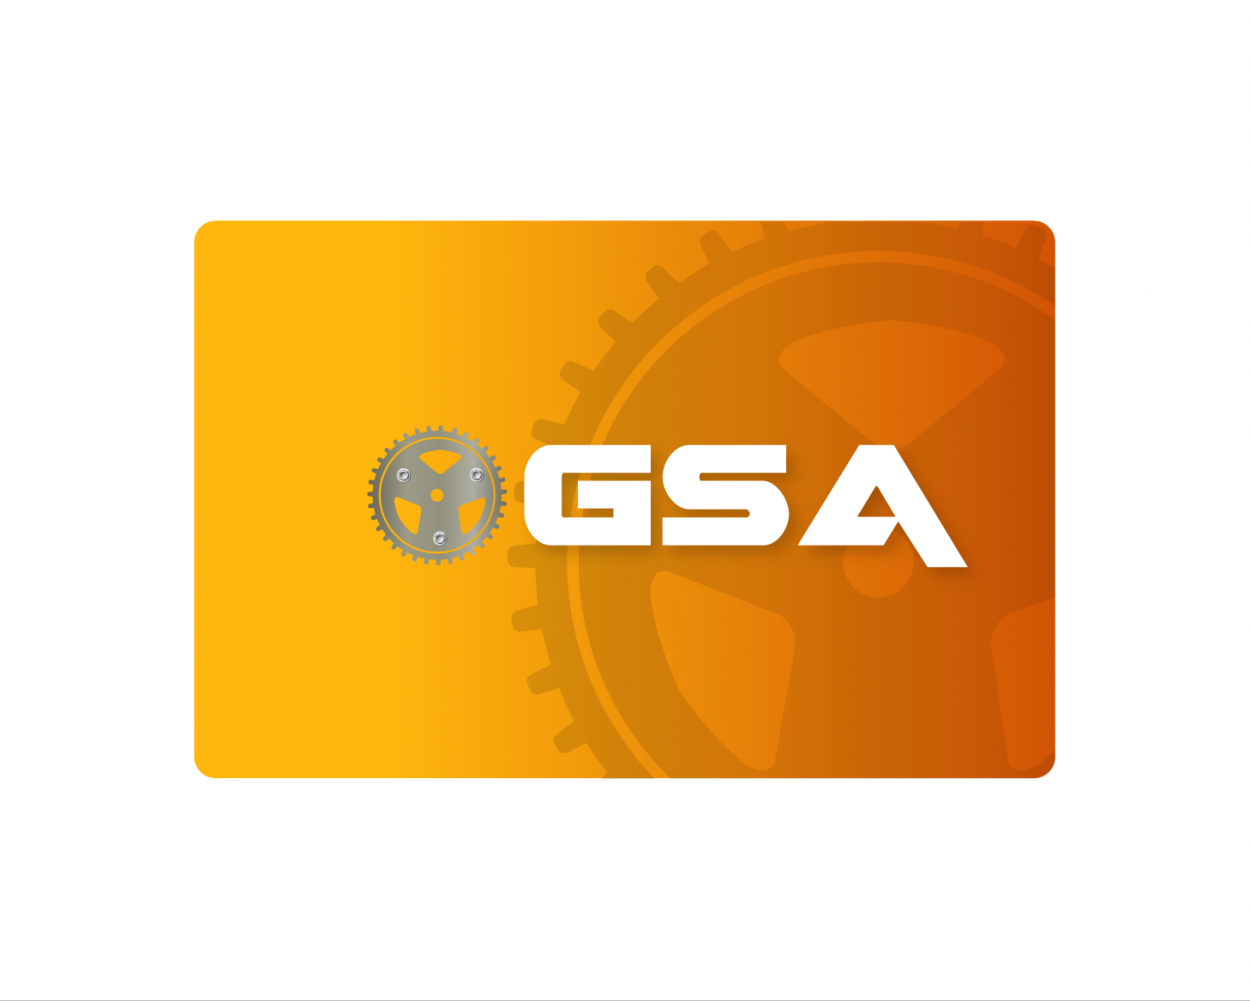 Business Card & Stationery Design entry 772879 submitted by crissgee to the Business Card & Stationery Design for GSA run by gsafertigung